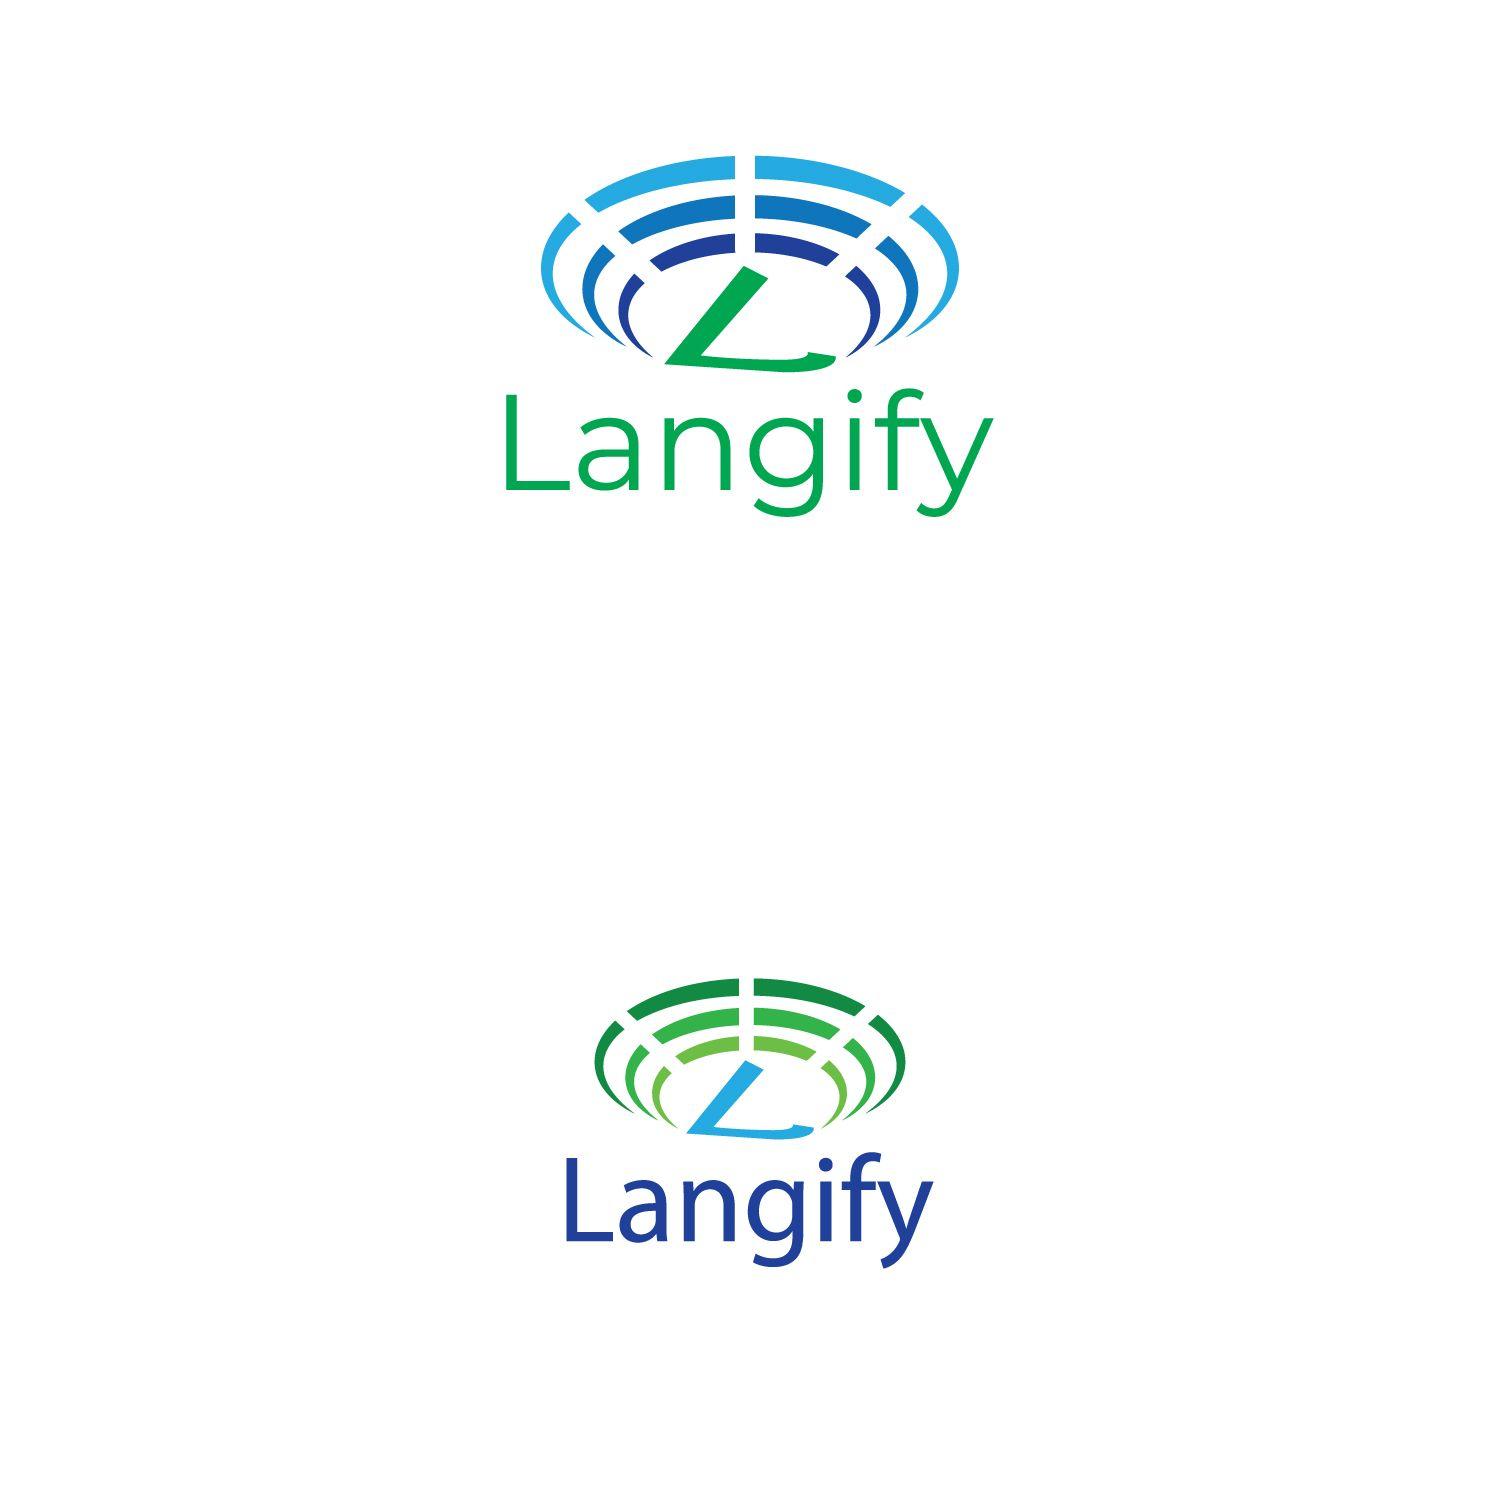 Rina Logo - Modern, Professional Logo Design for Langify by Rina 4. Design